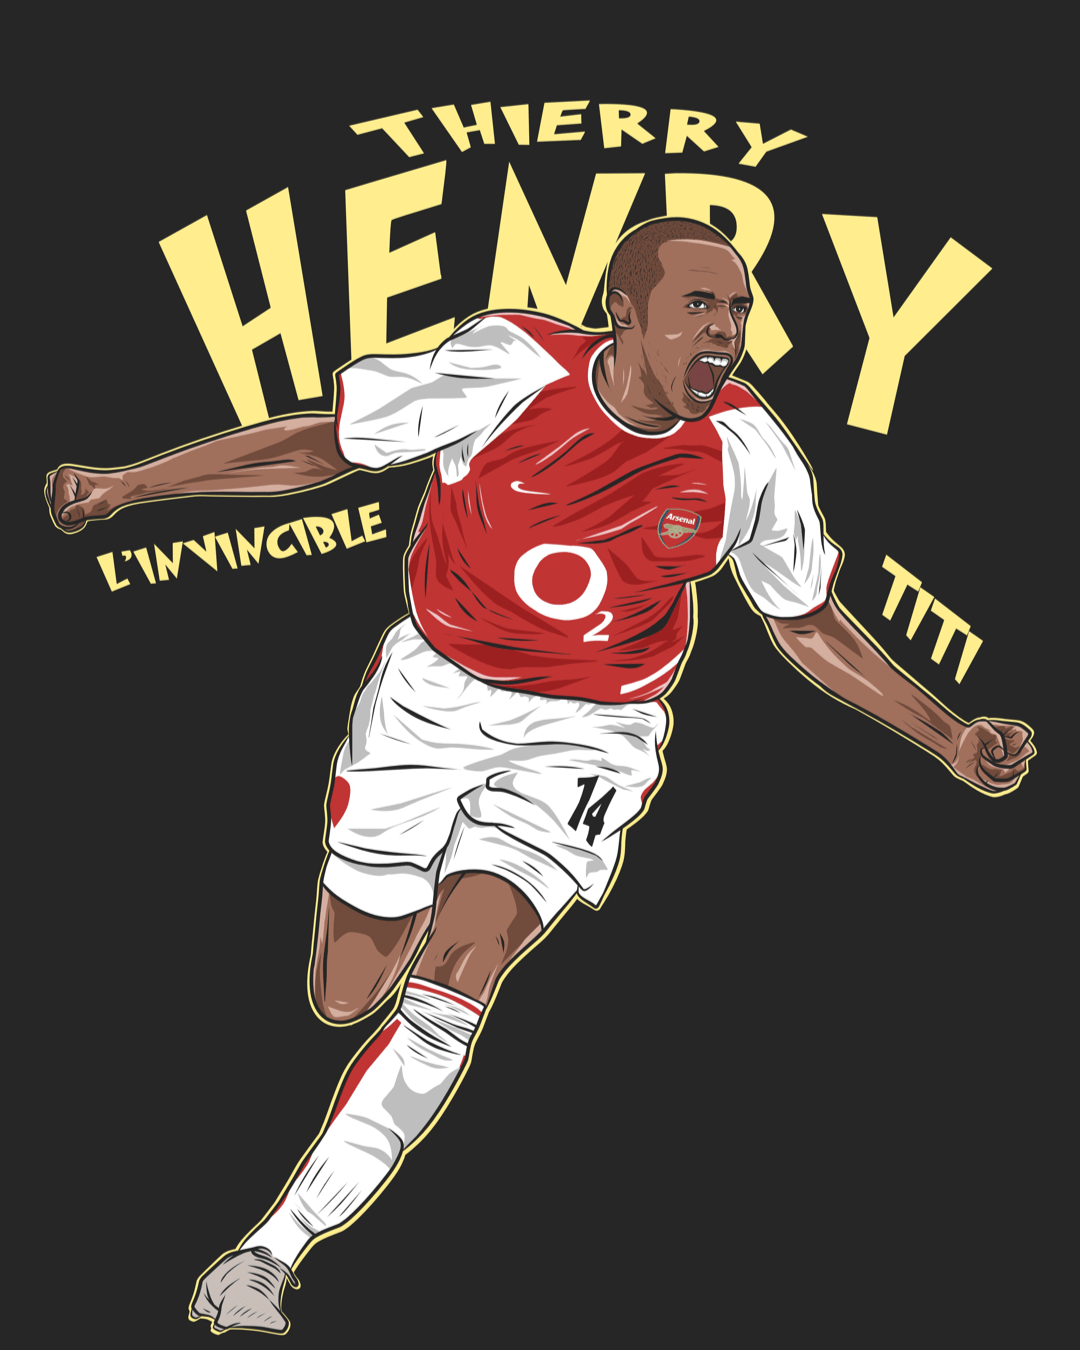 Arsenal Thierry Henry football shirt design - Enigma Football